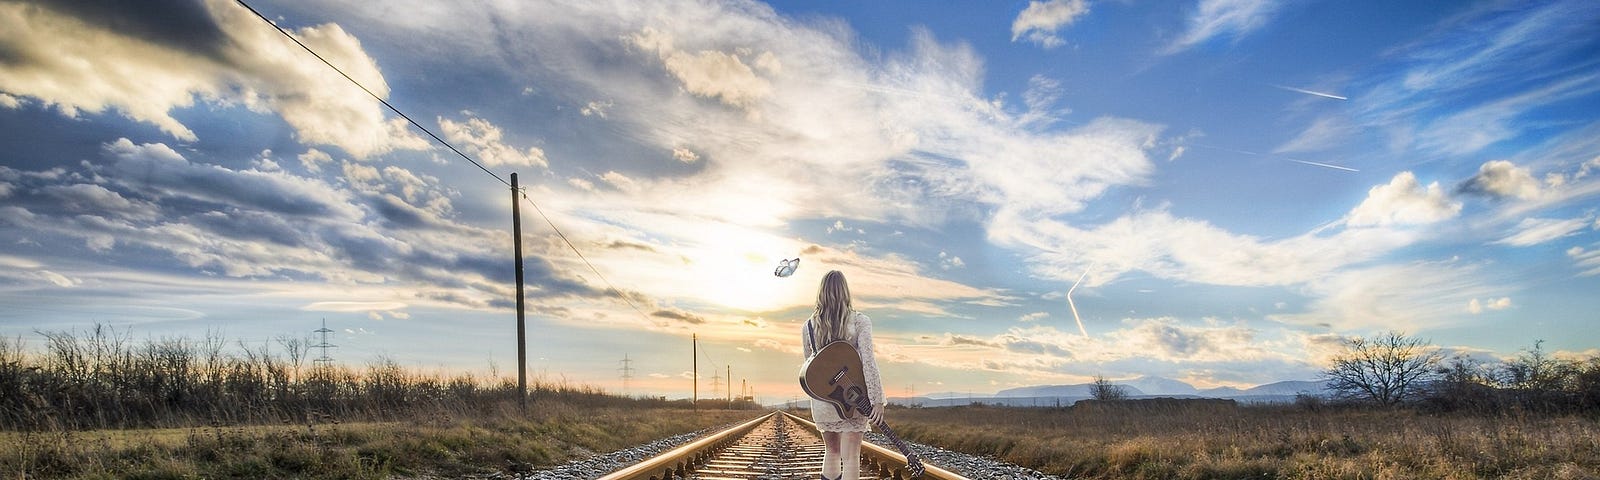 girl with guitar on train tracks